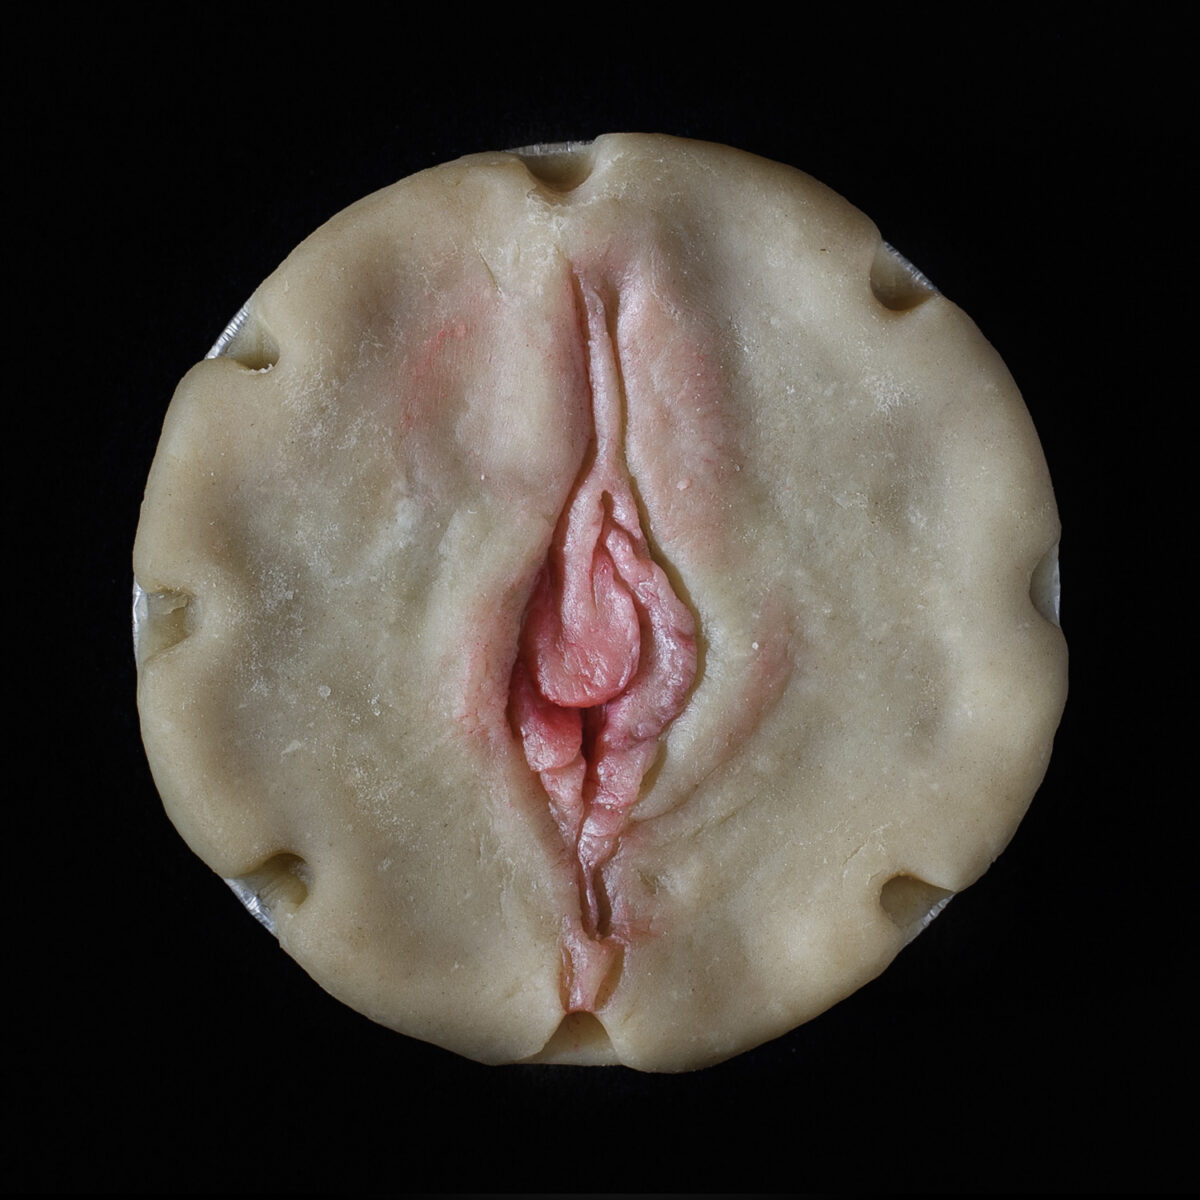 Pie on a black background. The pie art depics a pink vulva